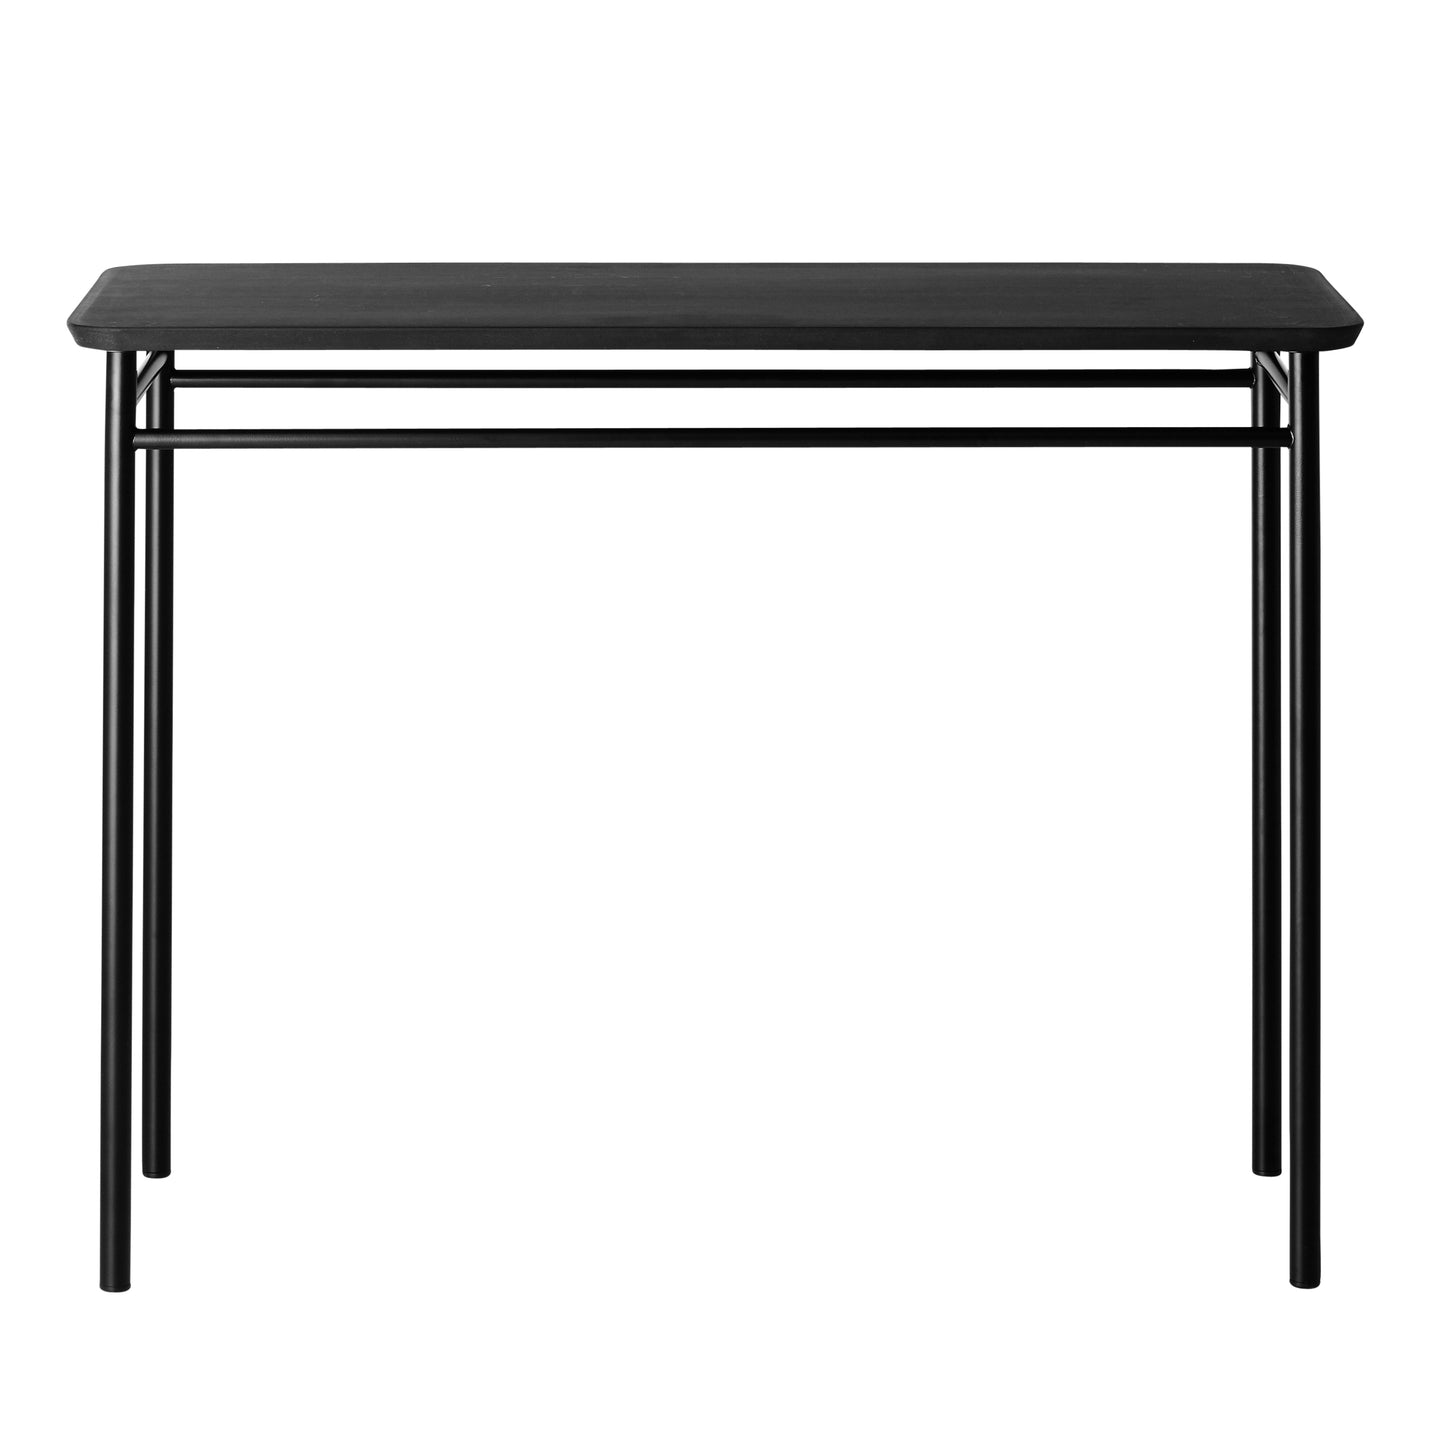 Hove Home small furniture Console table Console table Black